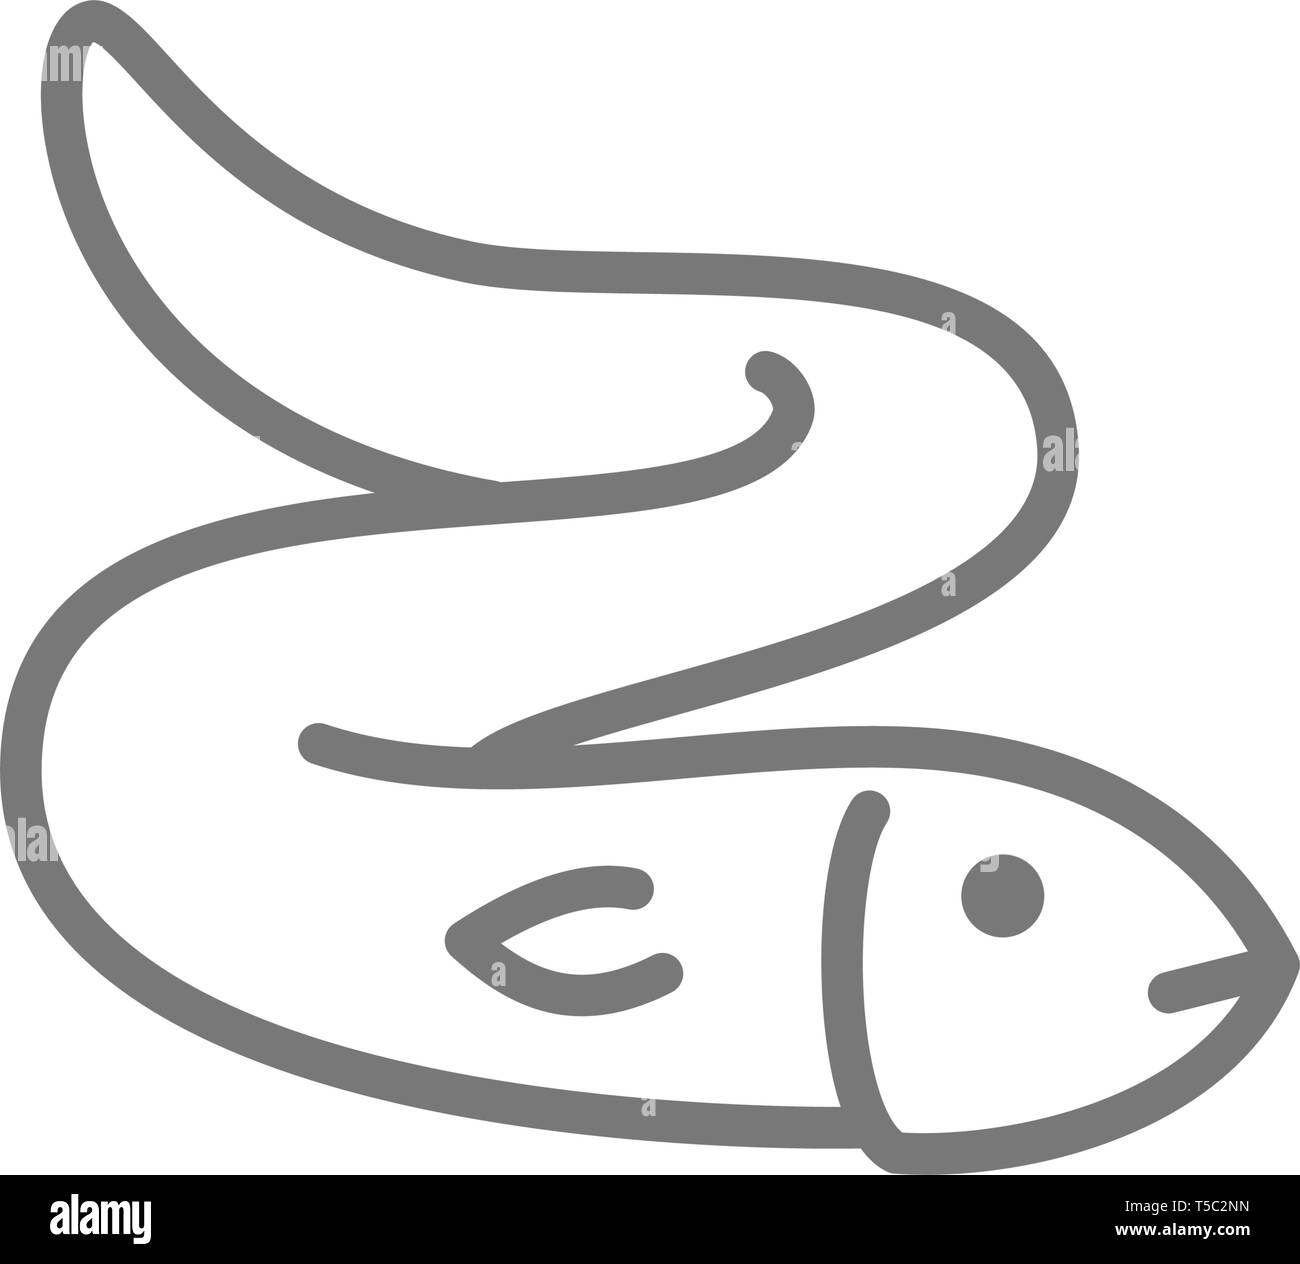 Eel, fish, aquatic animal line icon. Stock Vector